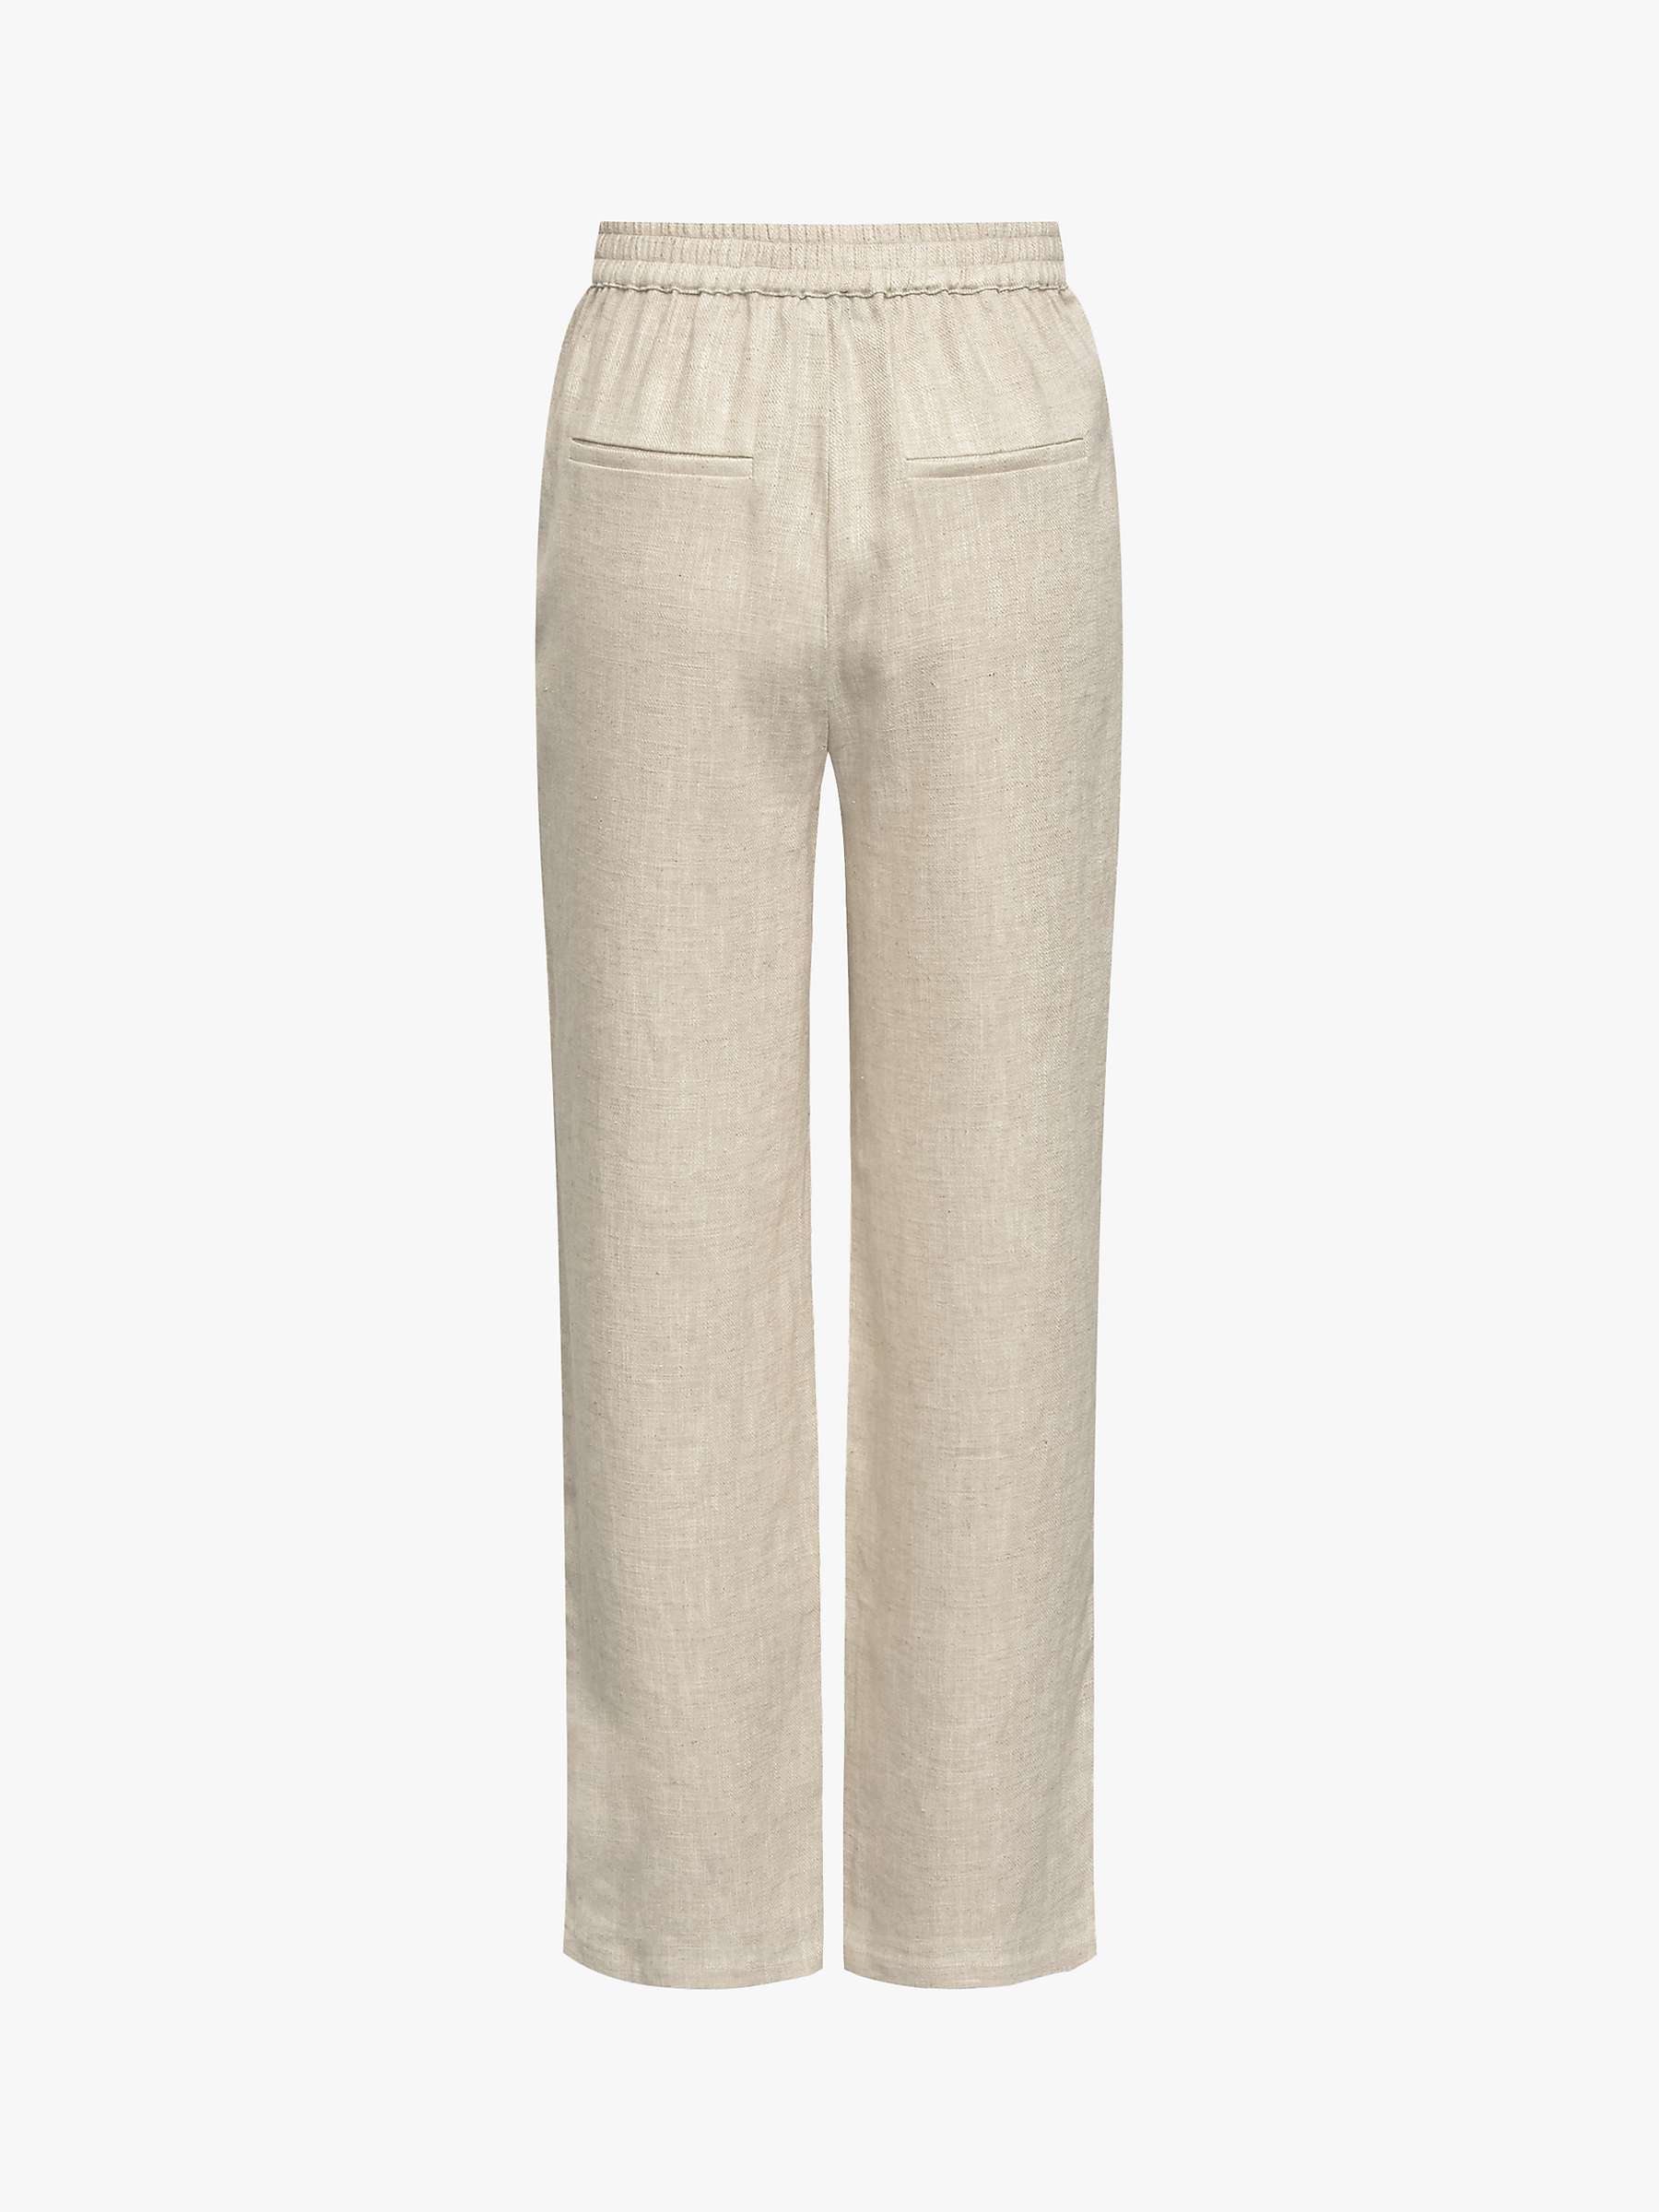 Buy A-VIEW Annali Linen Blend Straigh Leg Trousers, Light Sand Online at johnlewis.com